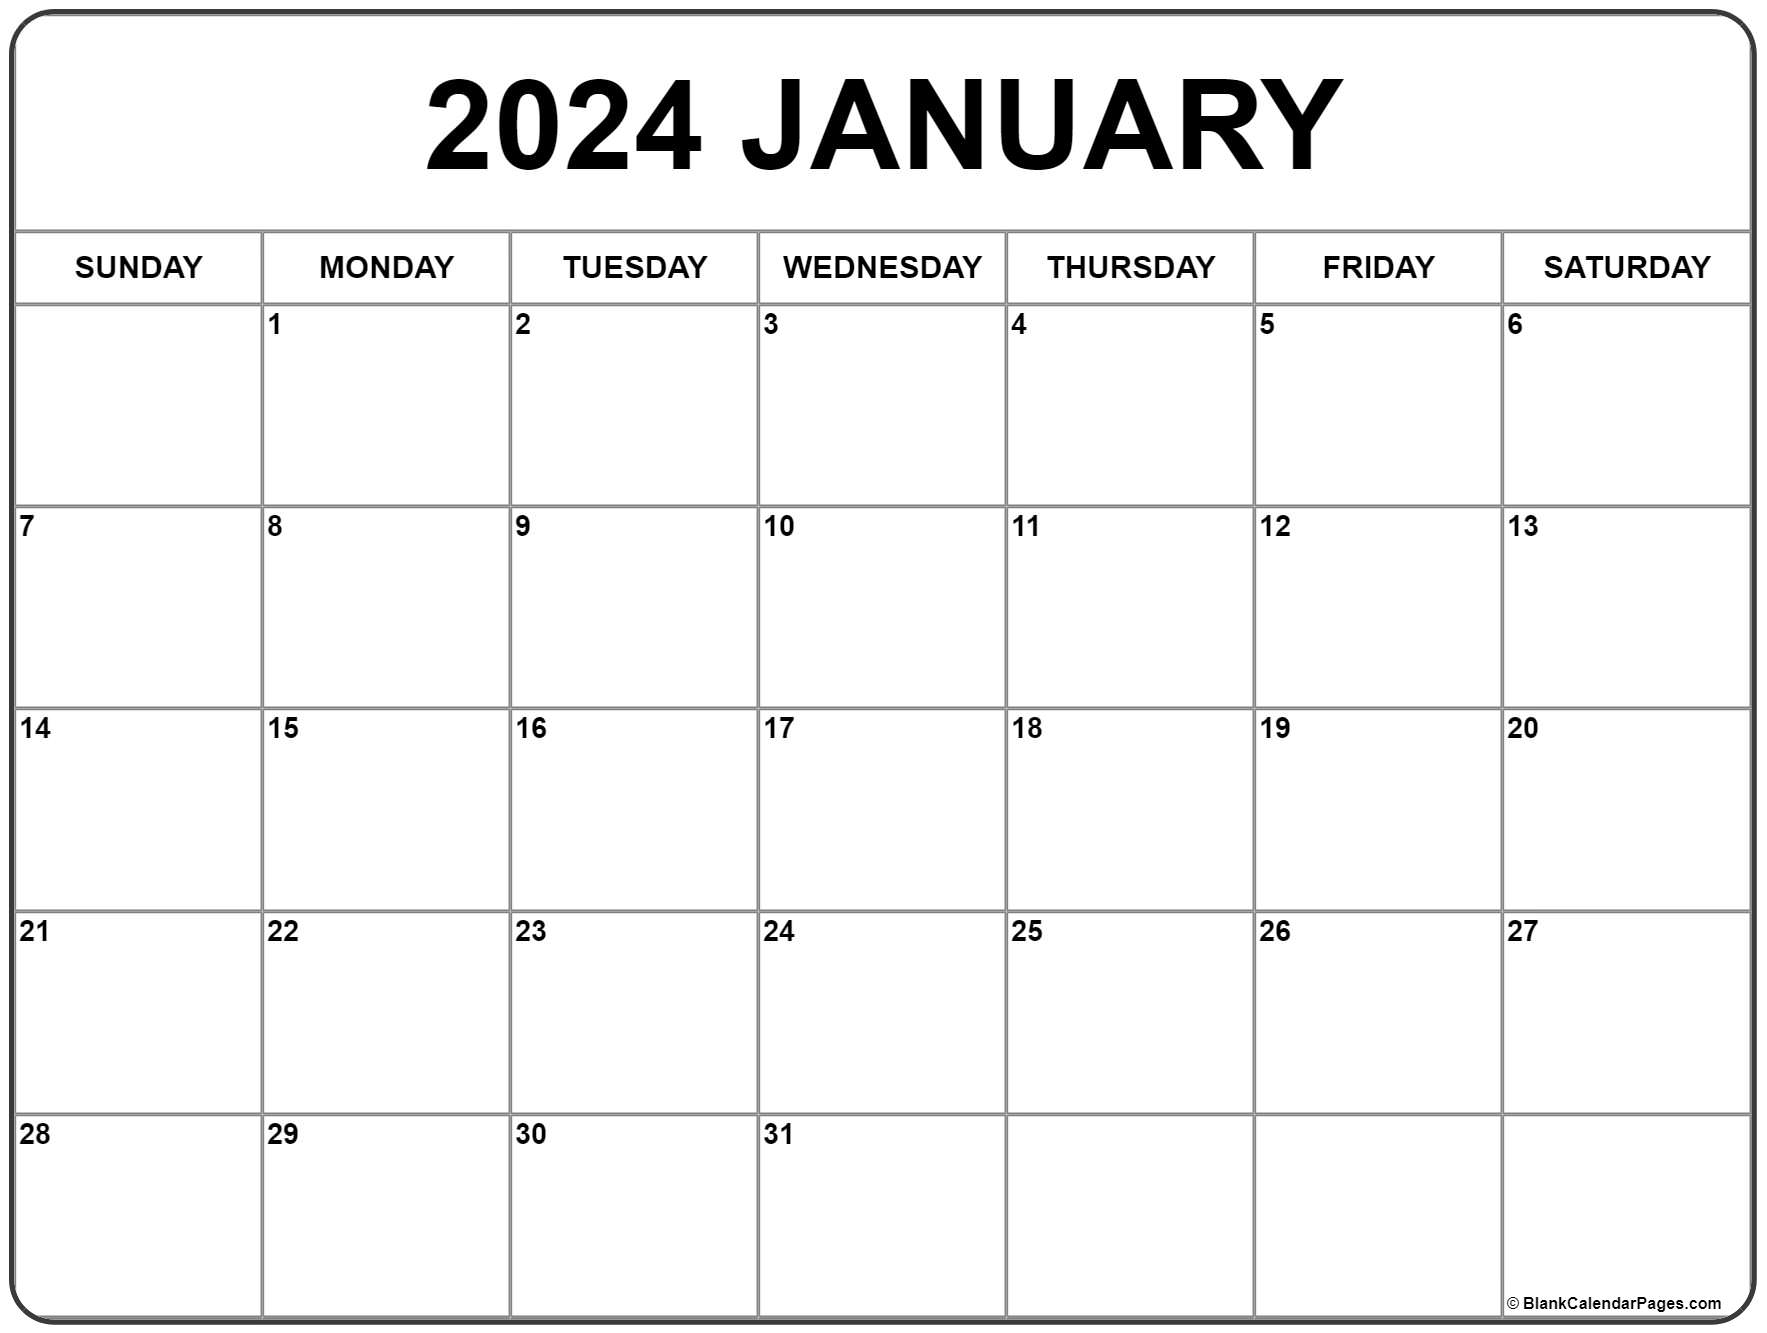 Free January 2022 Calendar Template January 2022 Calendar | Free Printable Calendar Templates